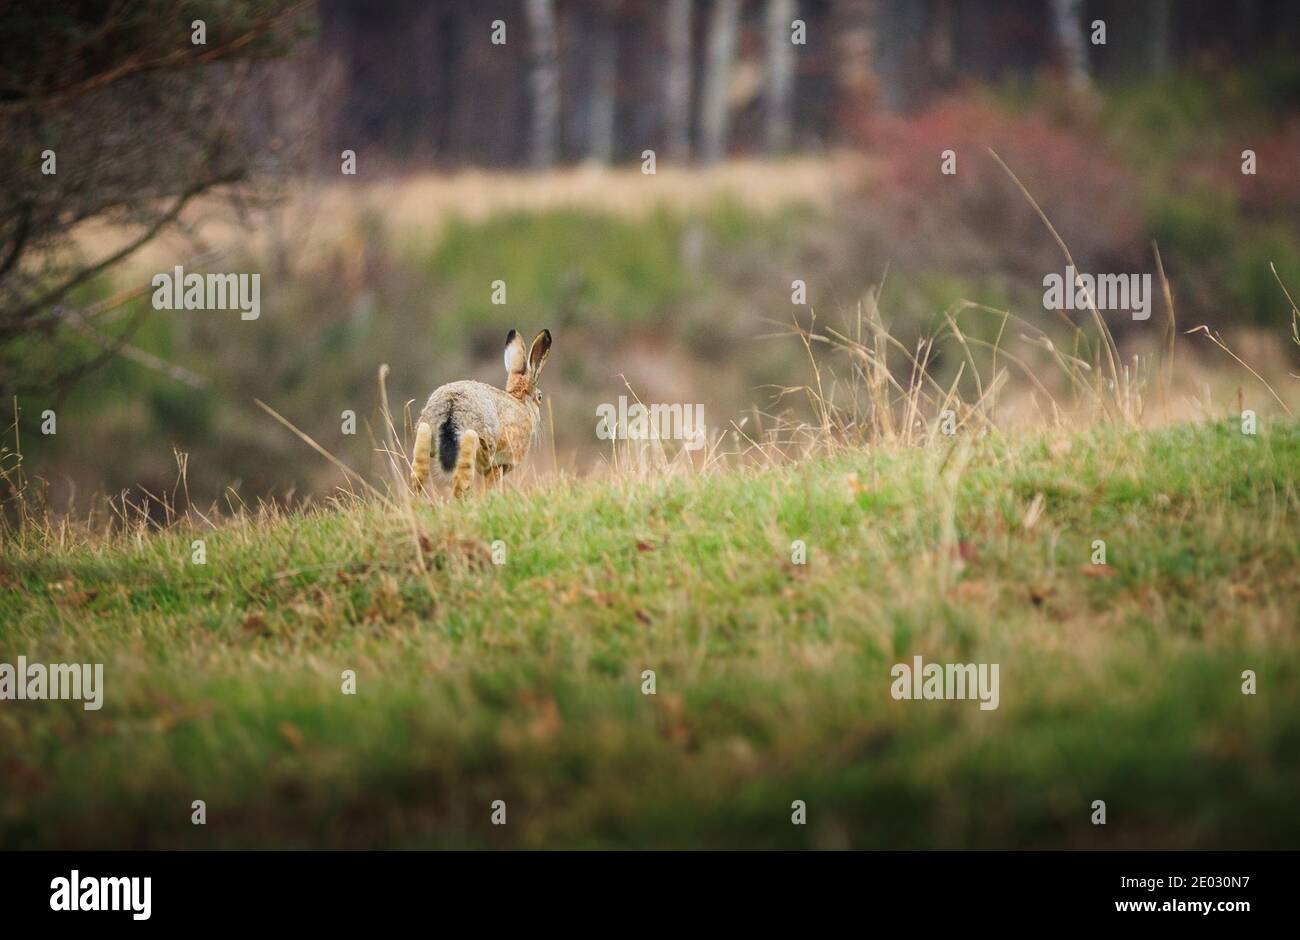 European hare (Lepus europaeus) in sprint on grass Stock Photo